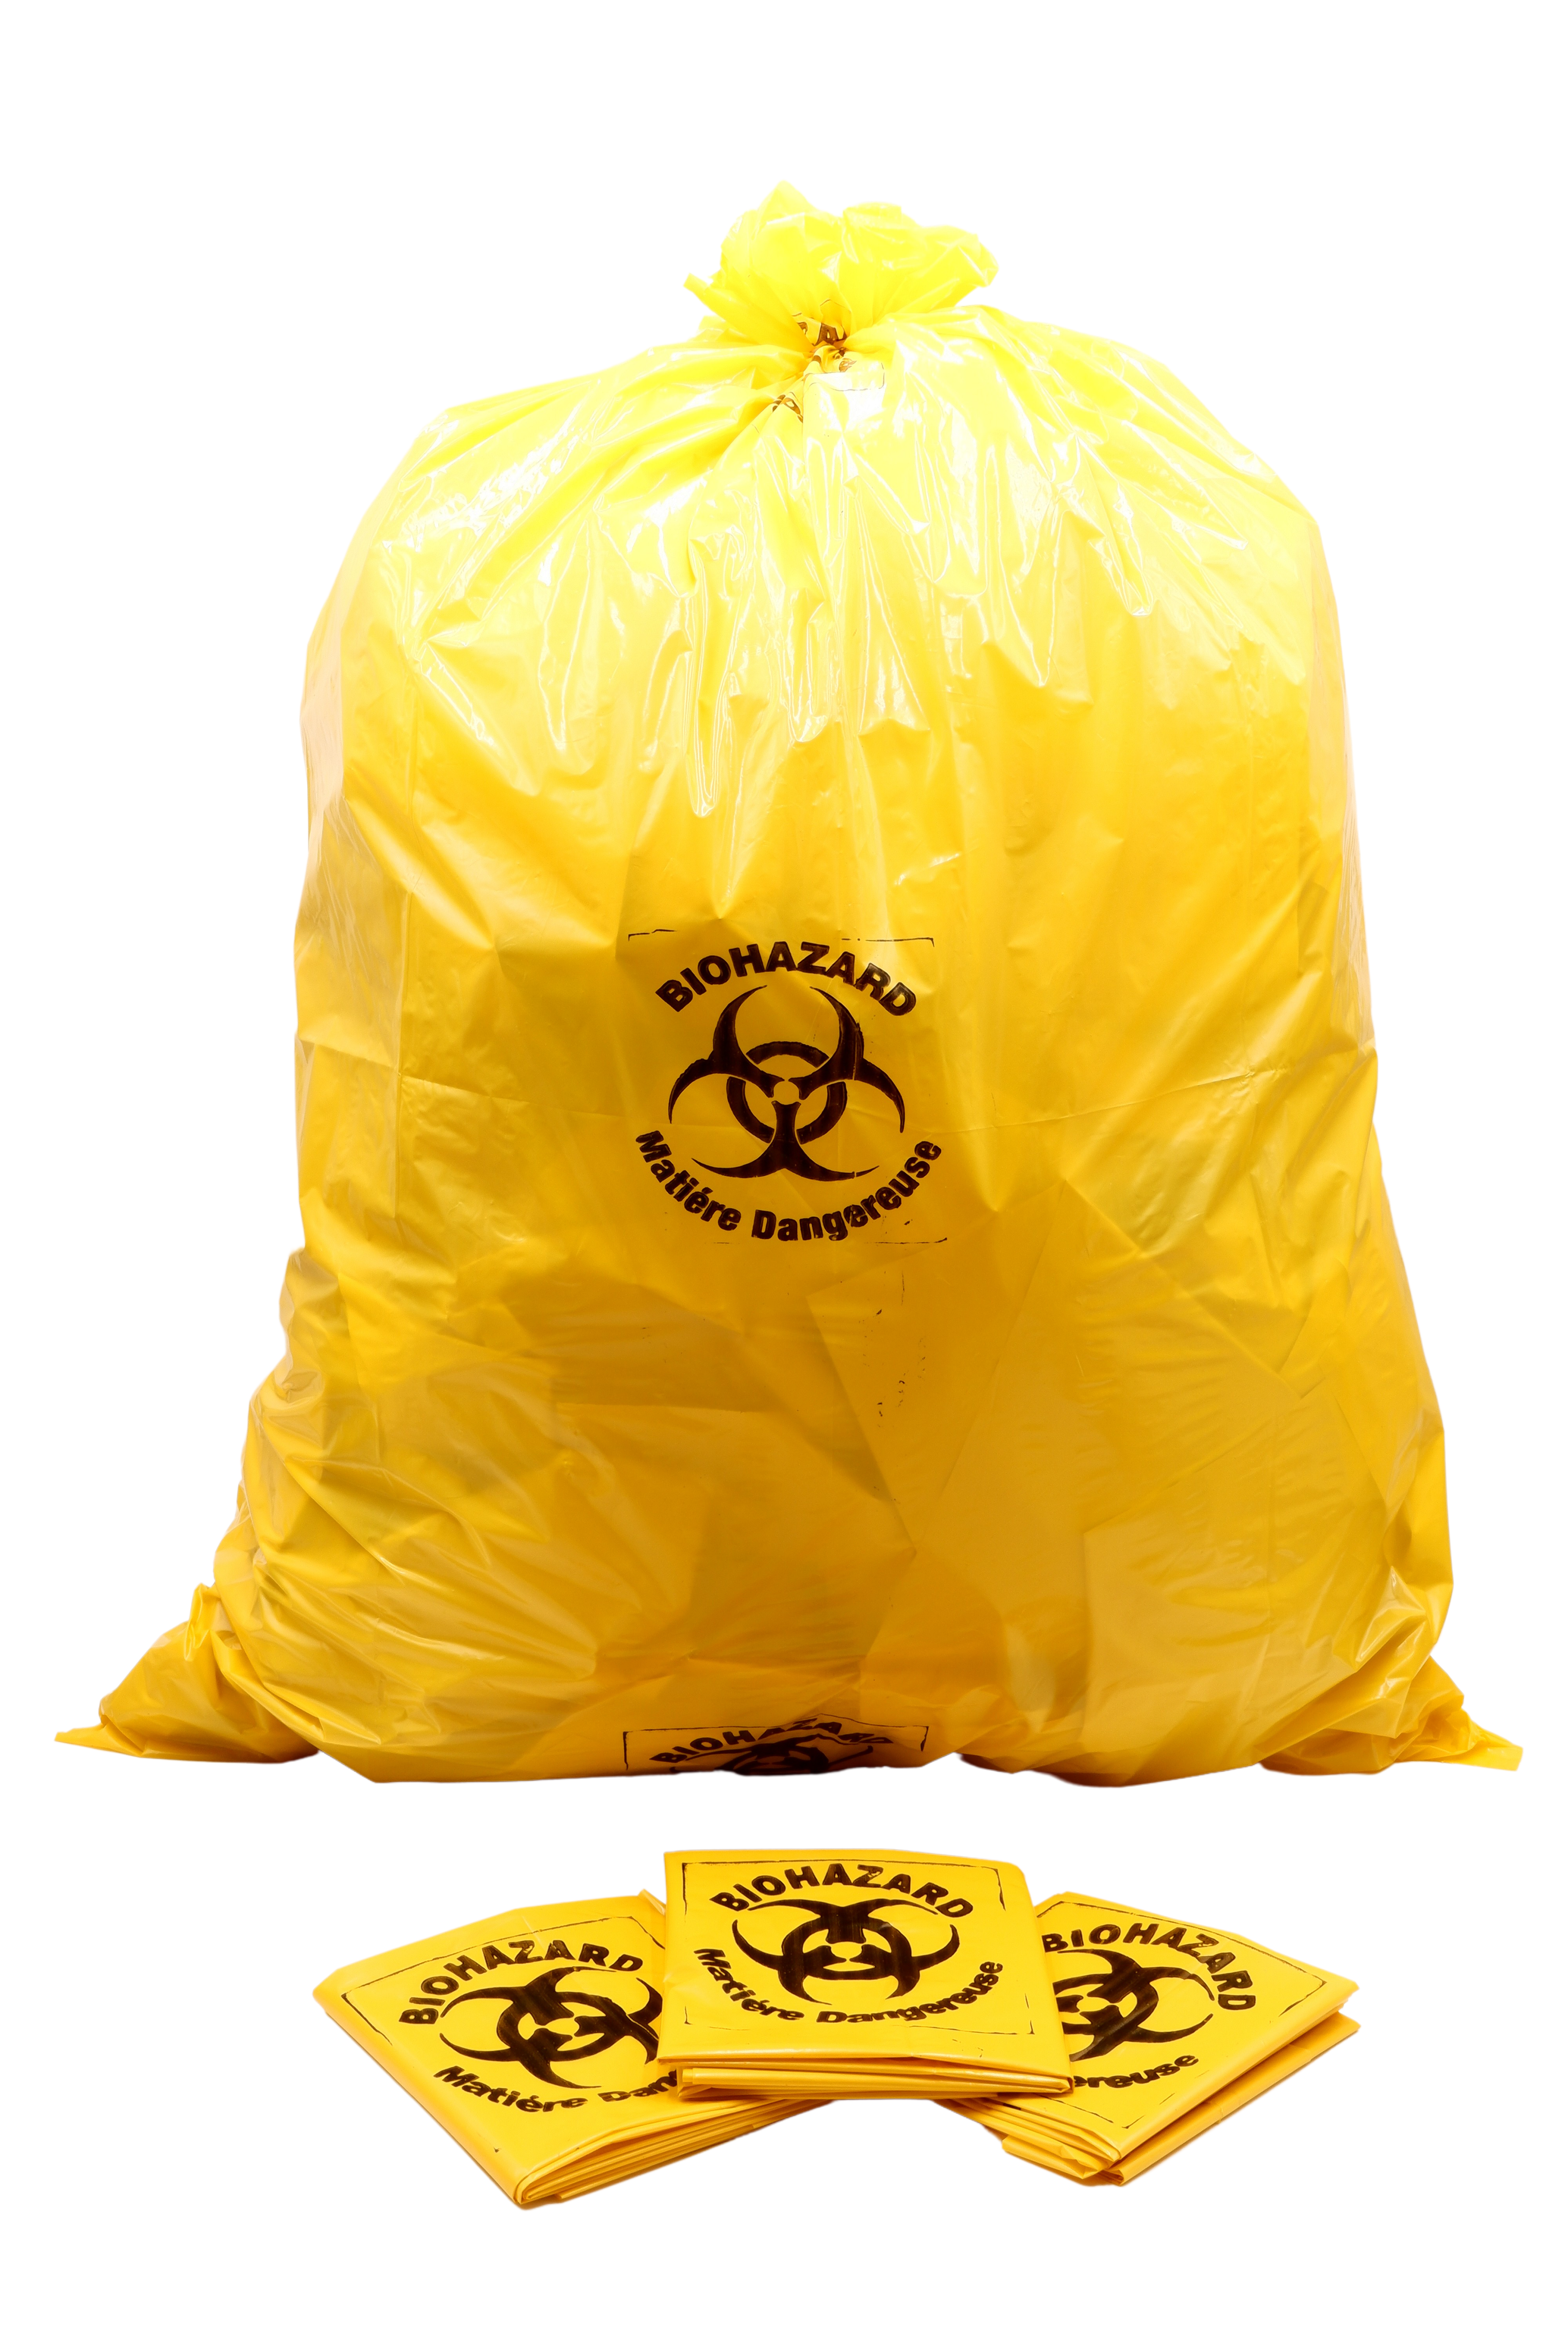 Yellow Bio-Hazard Isolation Waste Bags - 30" x 40" - Box of 125